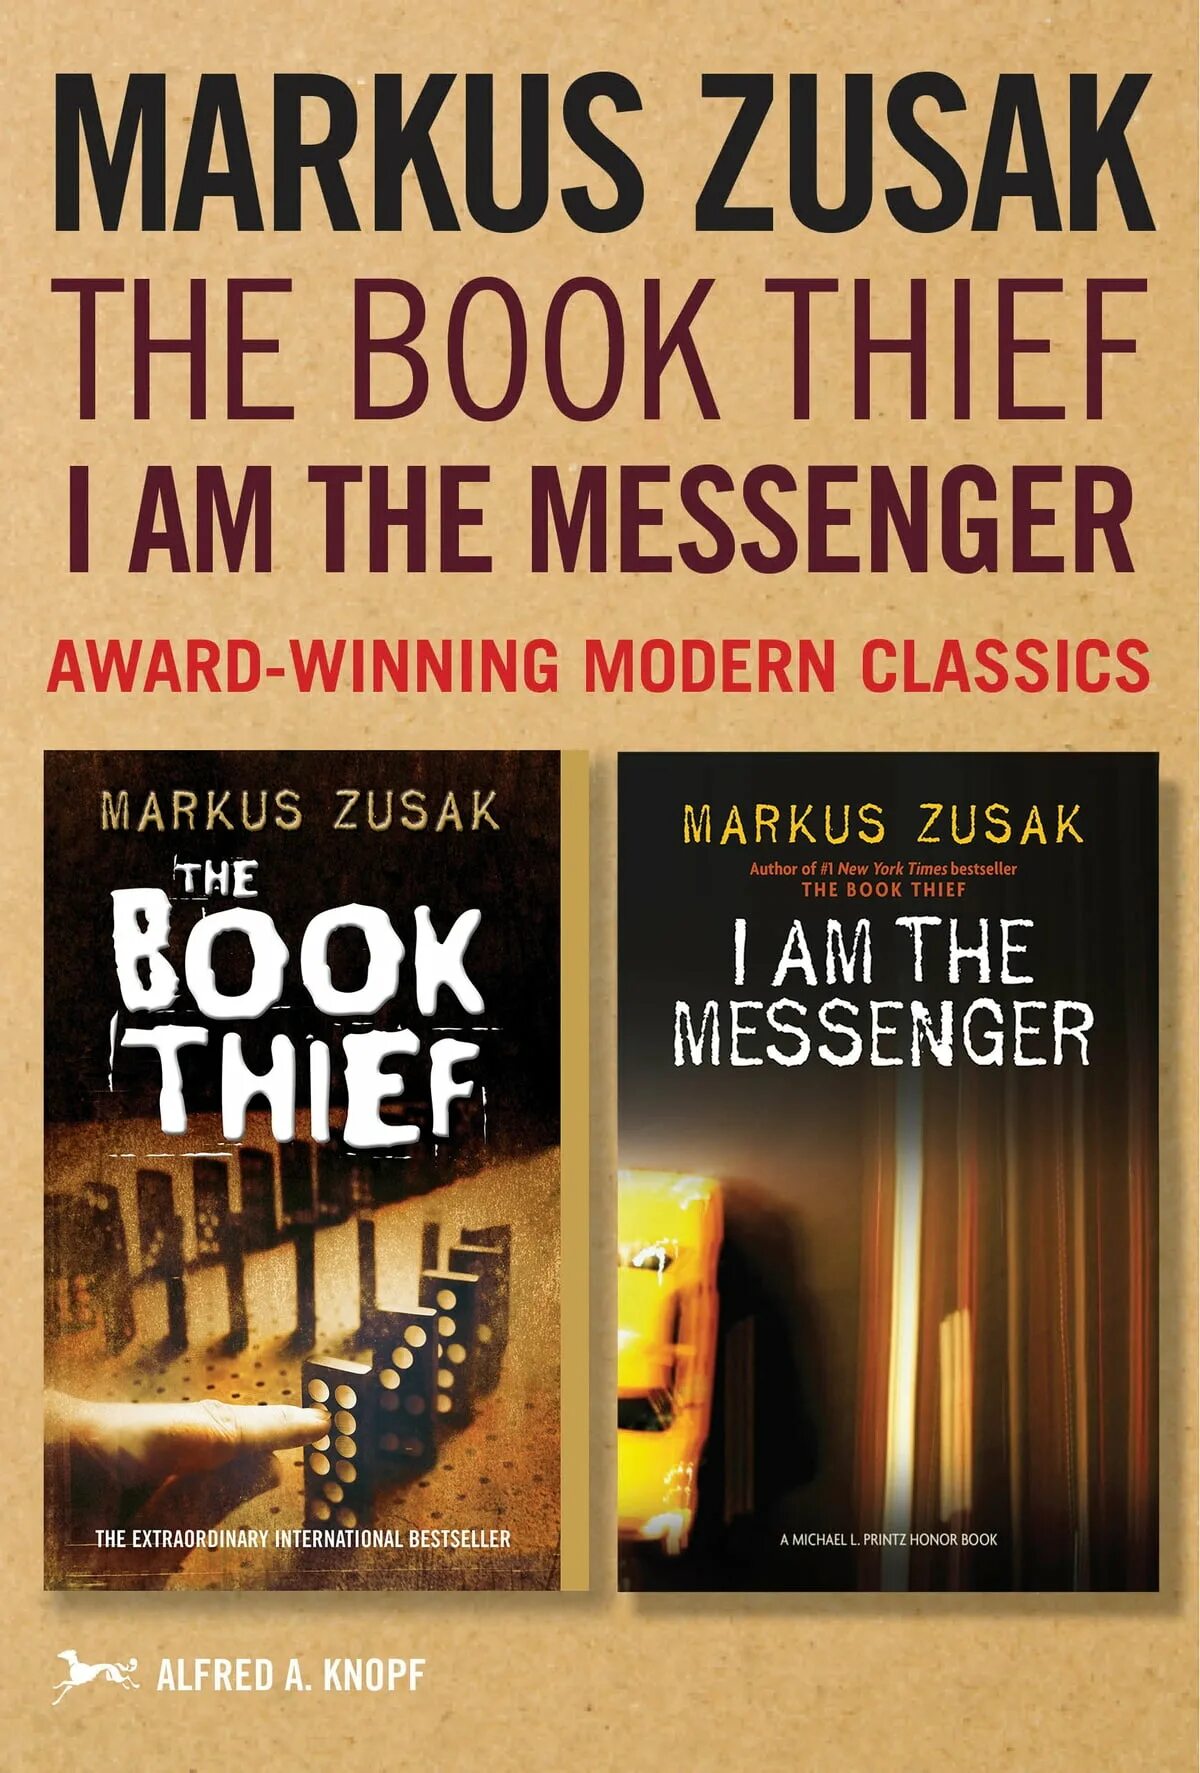 The book Thief книга. Markus Zusak "the book Thief". The Messenger Markus Zusak. Markus Zusak books. I am книга